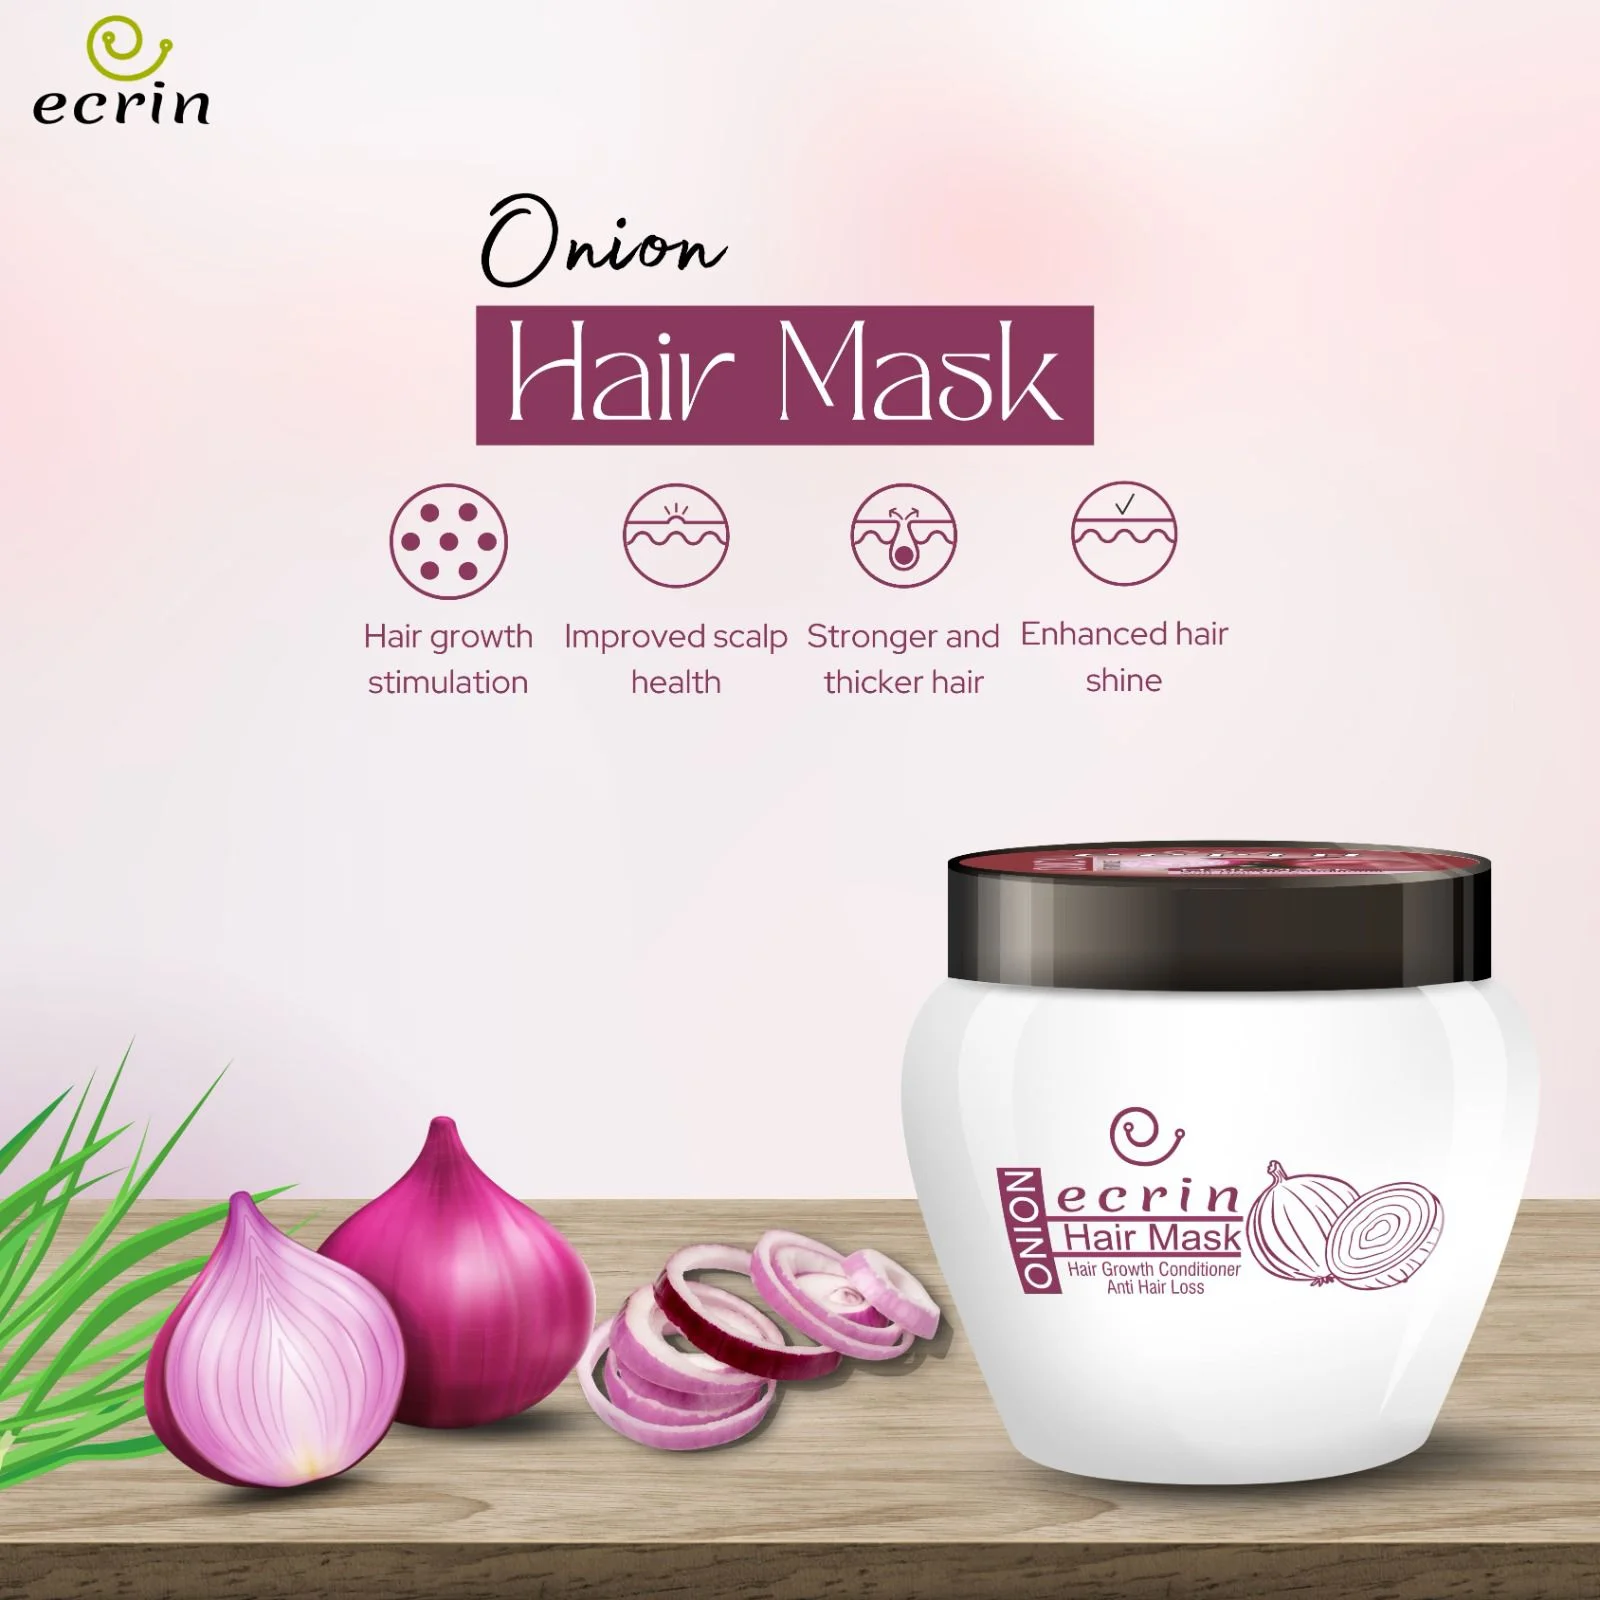 Ecrin Onion Hair Mask